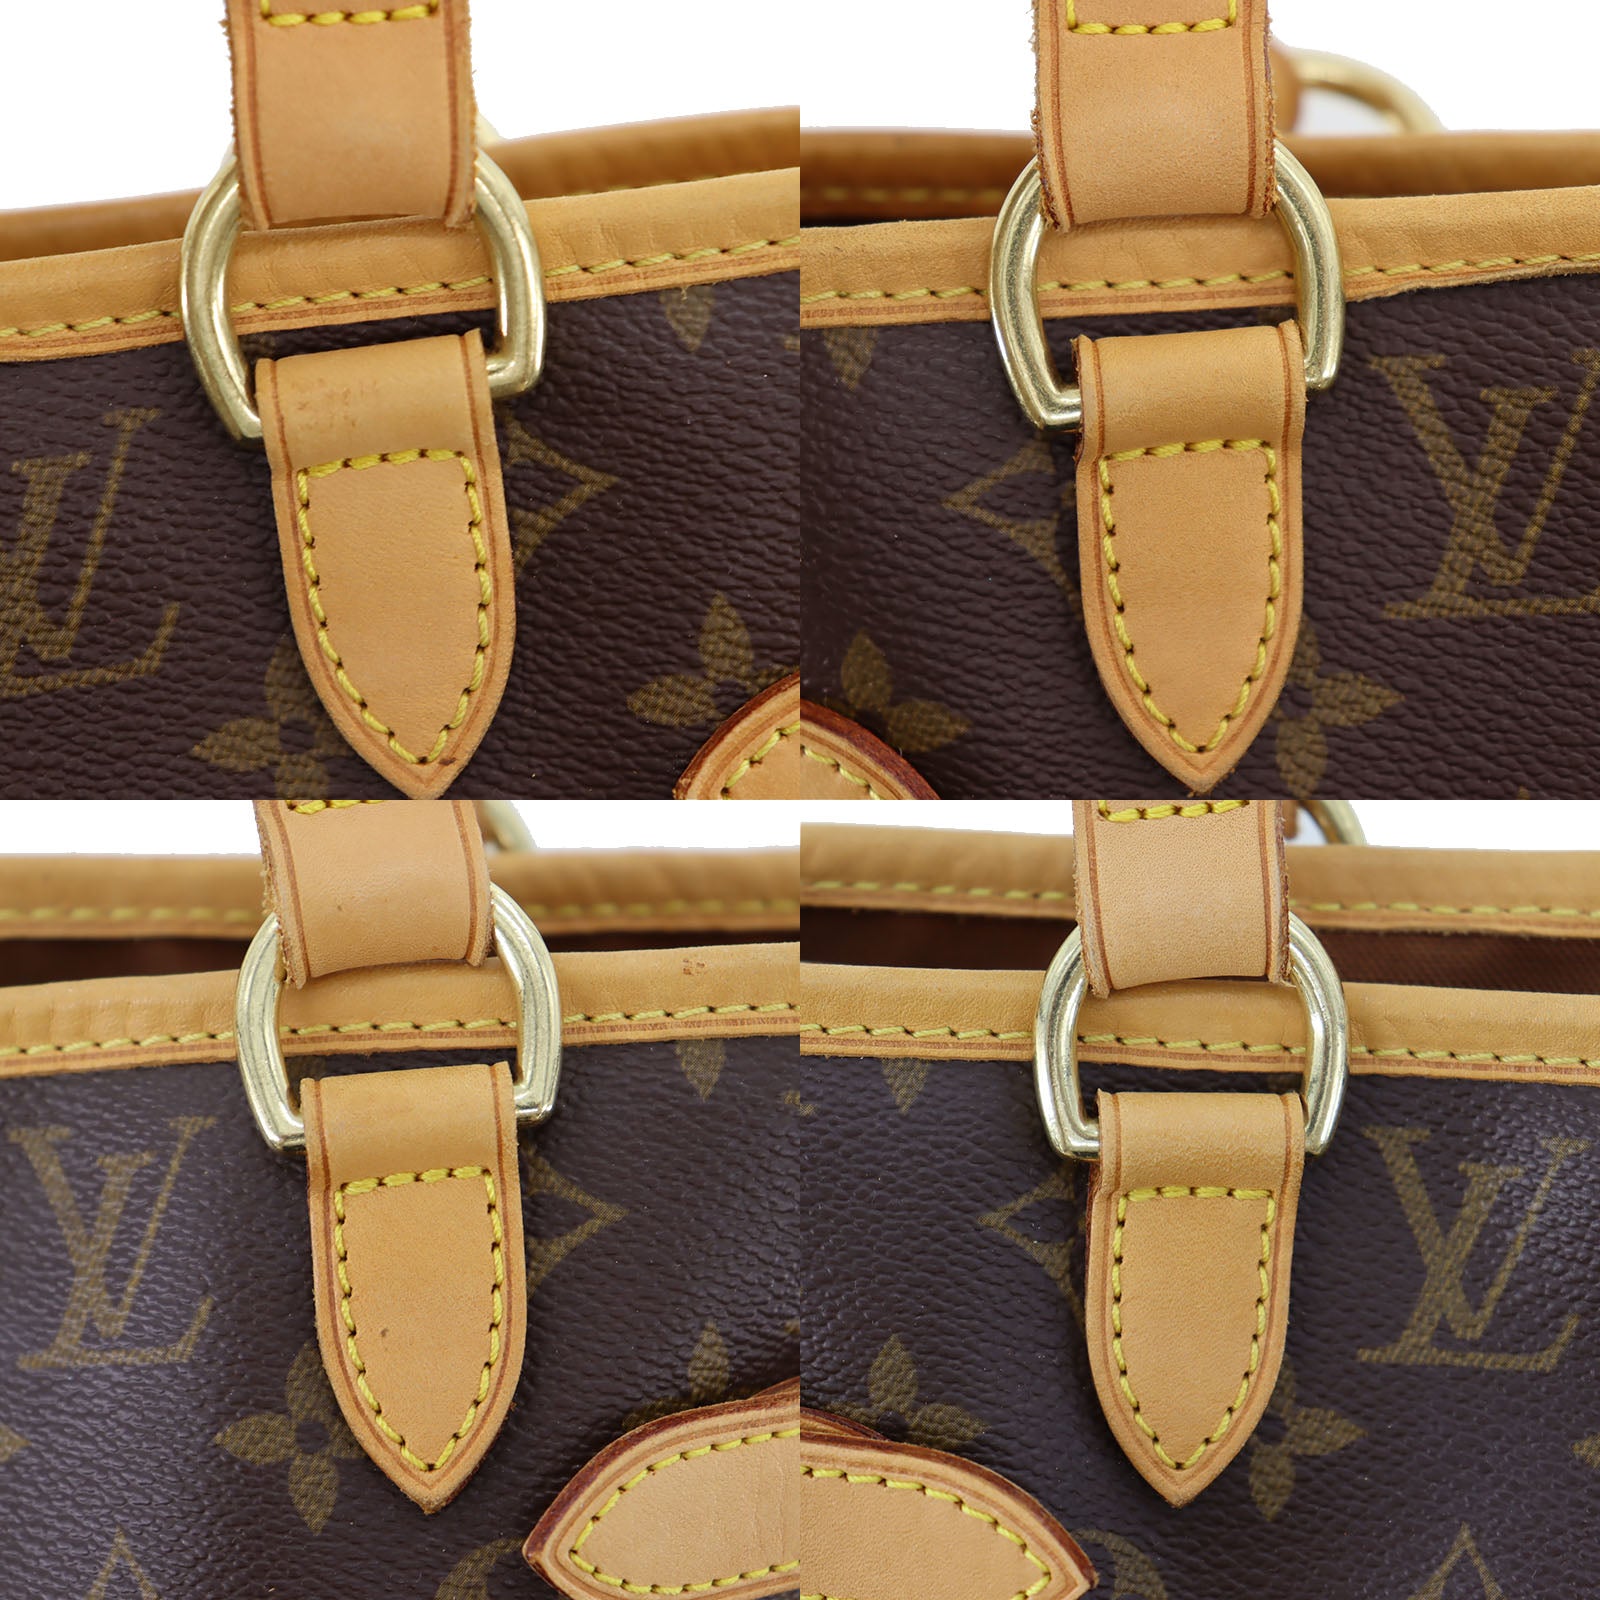 Louis Vuitton Vintage Monogram Shopper Bag Brown